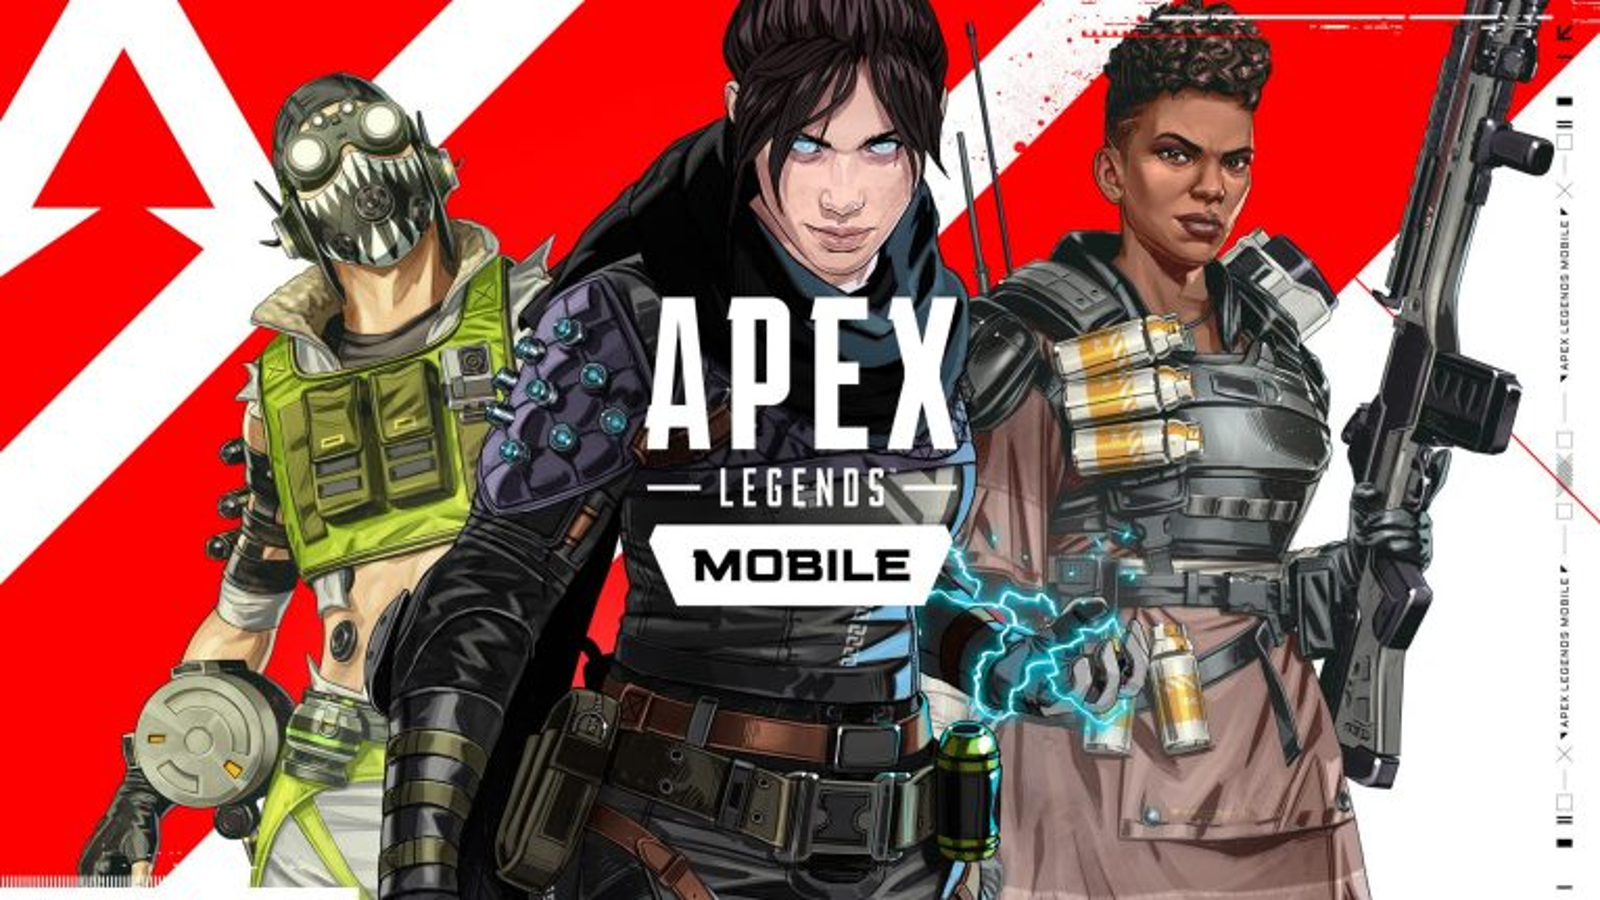 Apex Legends Mobile improves Legends' abilities for Mirage